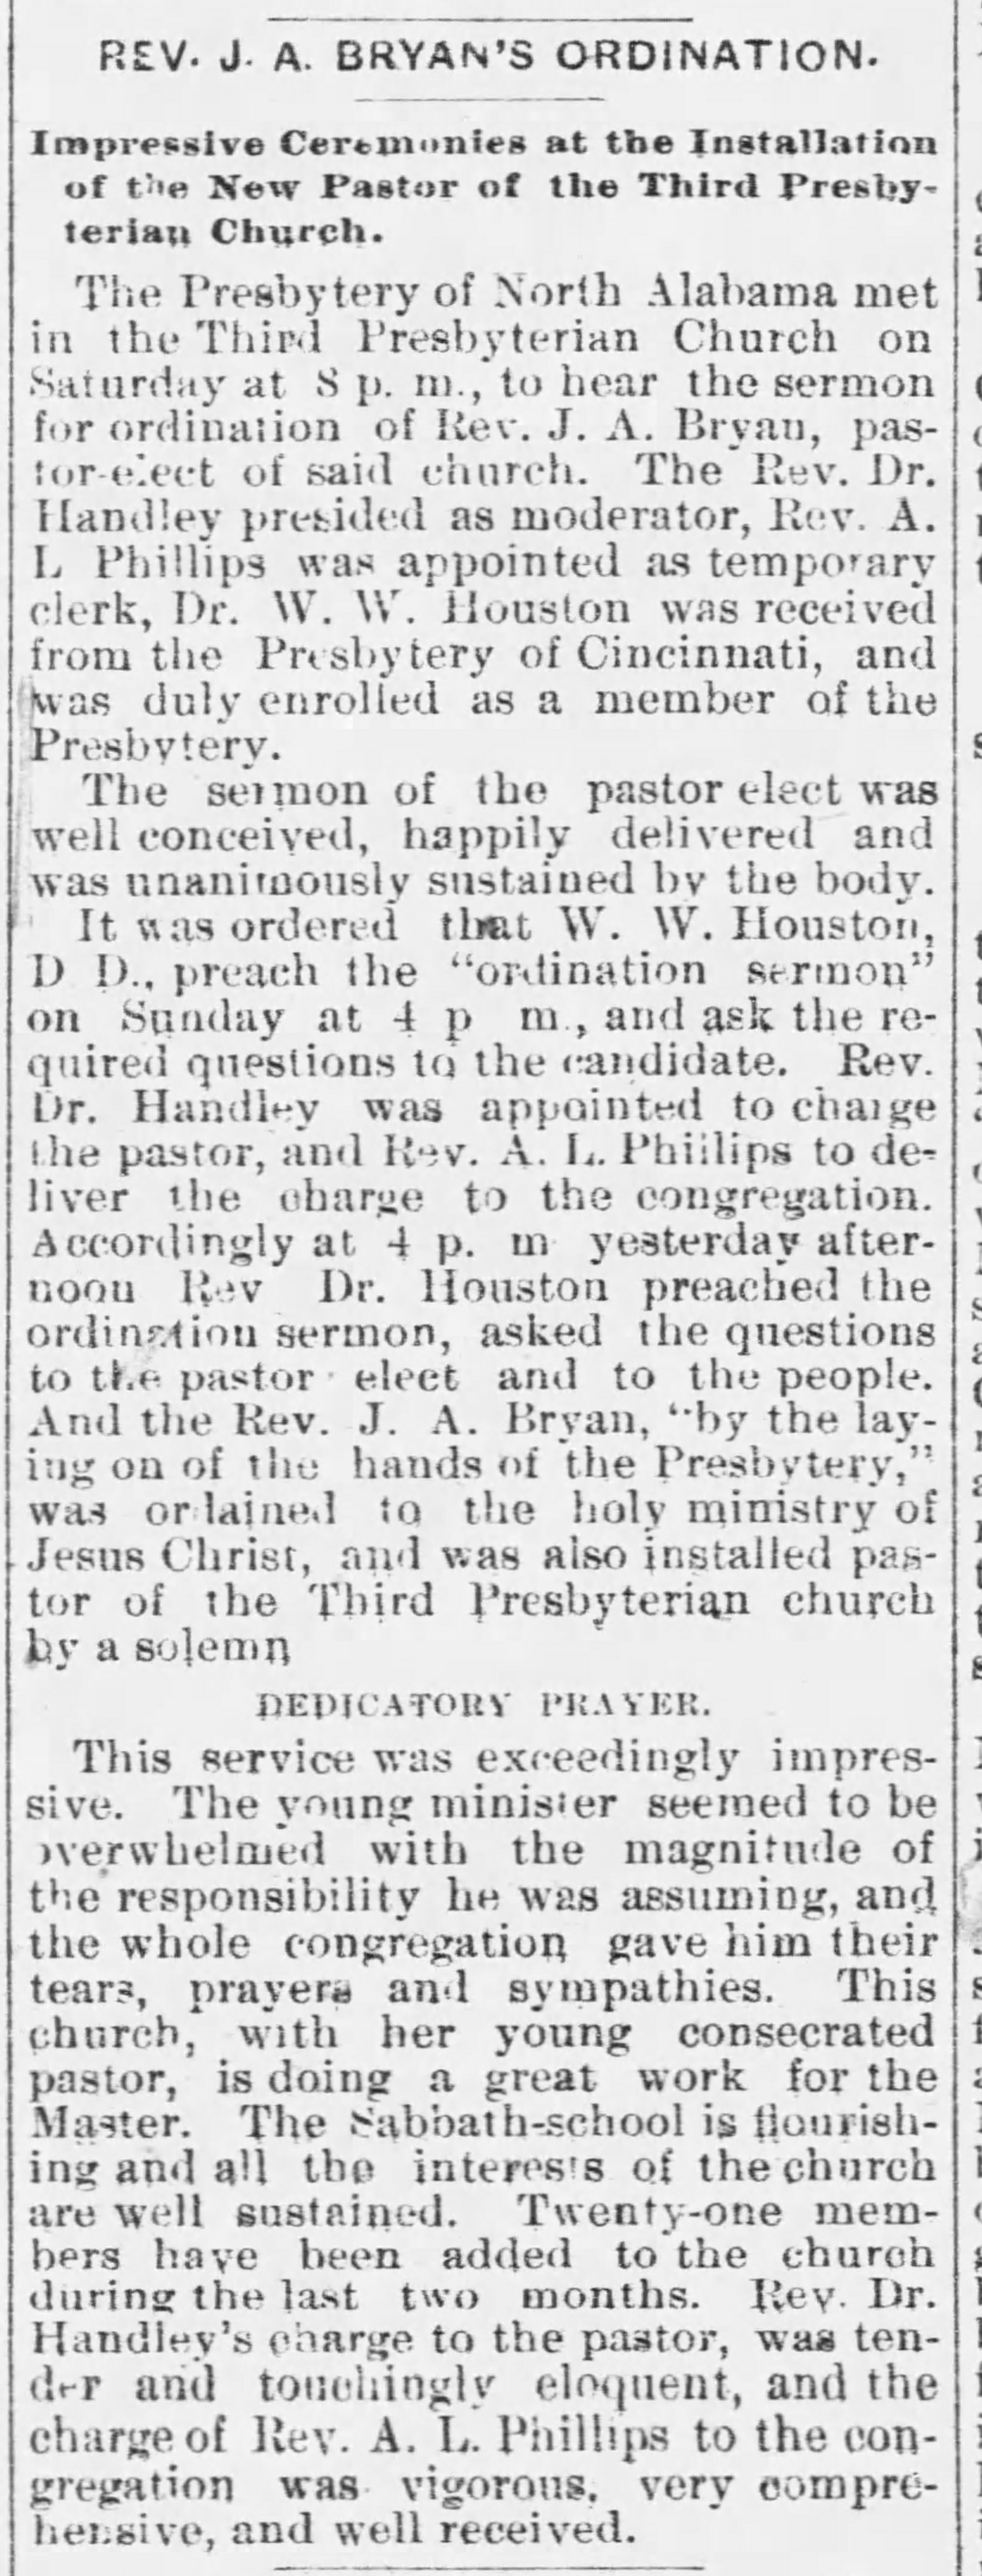 Rev. J.A. Bryan's Ordination